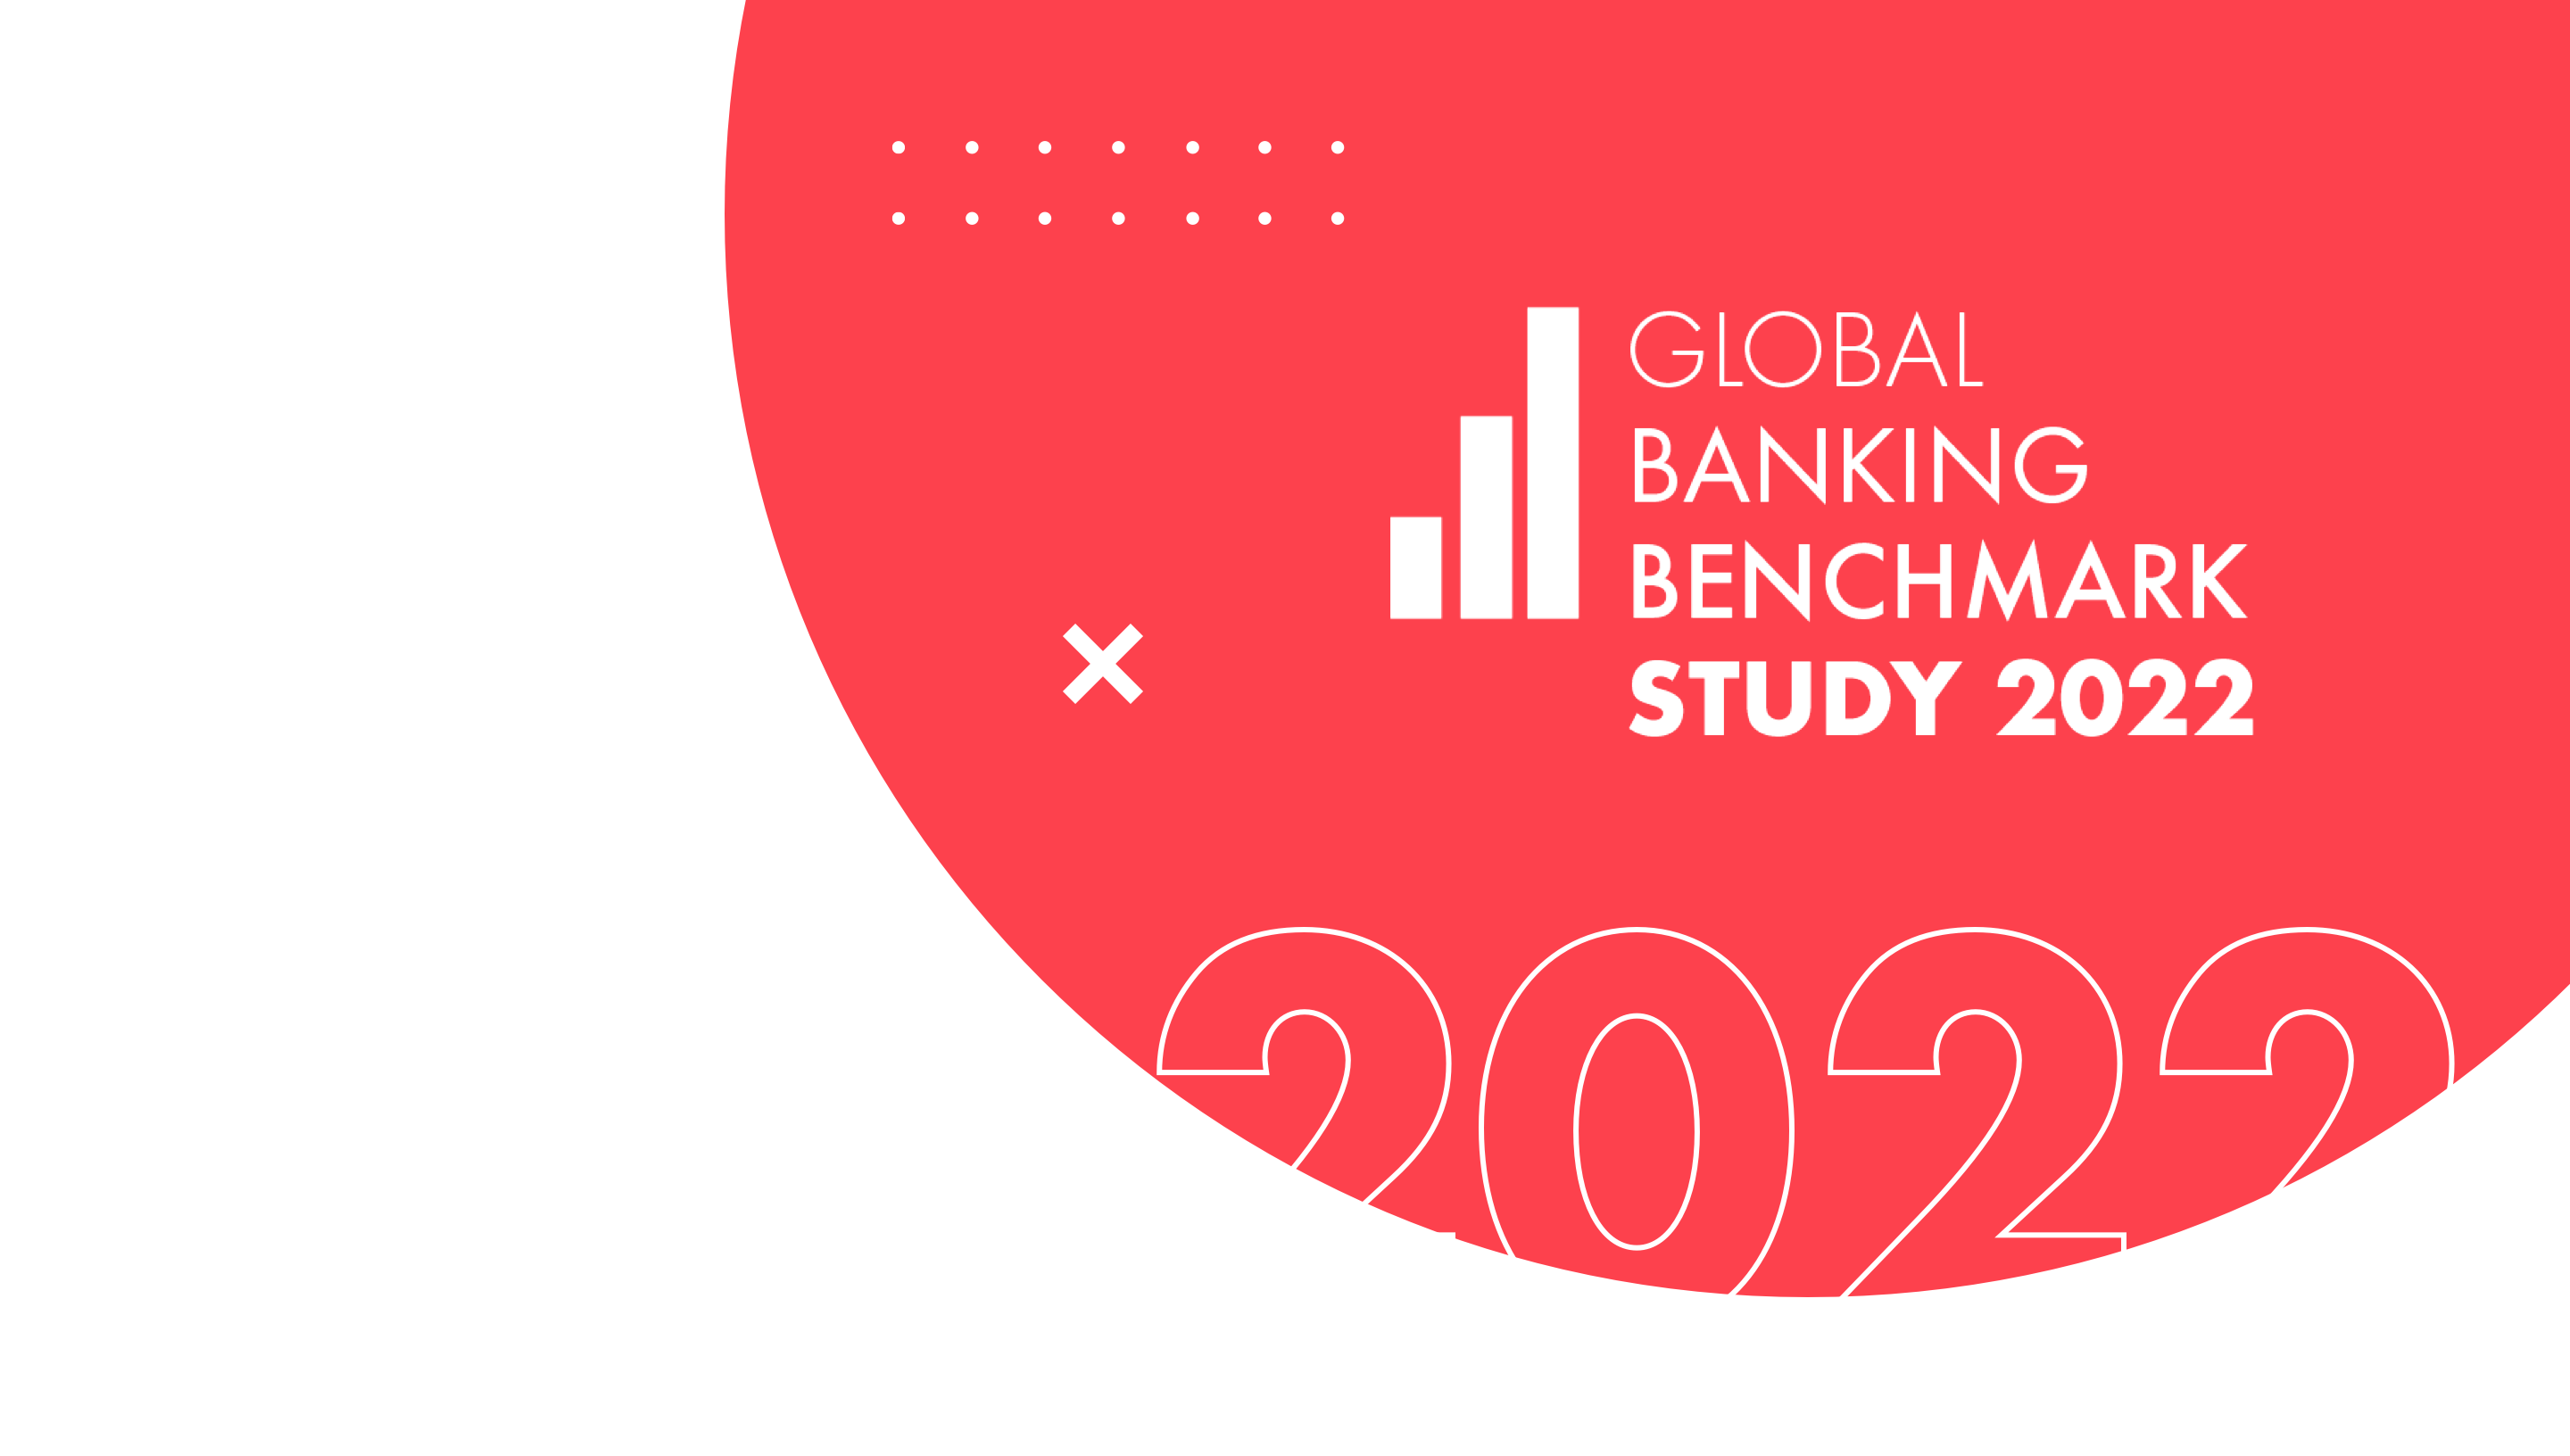 Global Banking Benchmark Study 2022